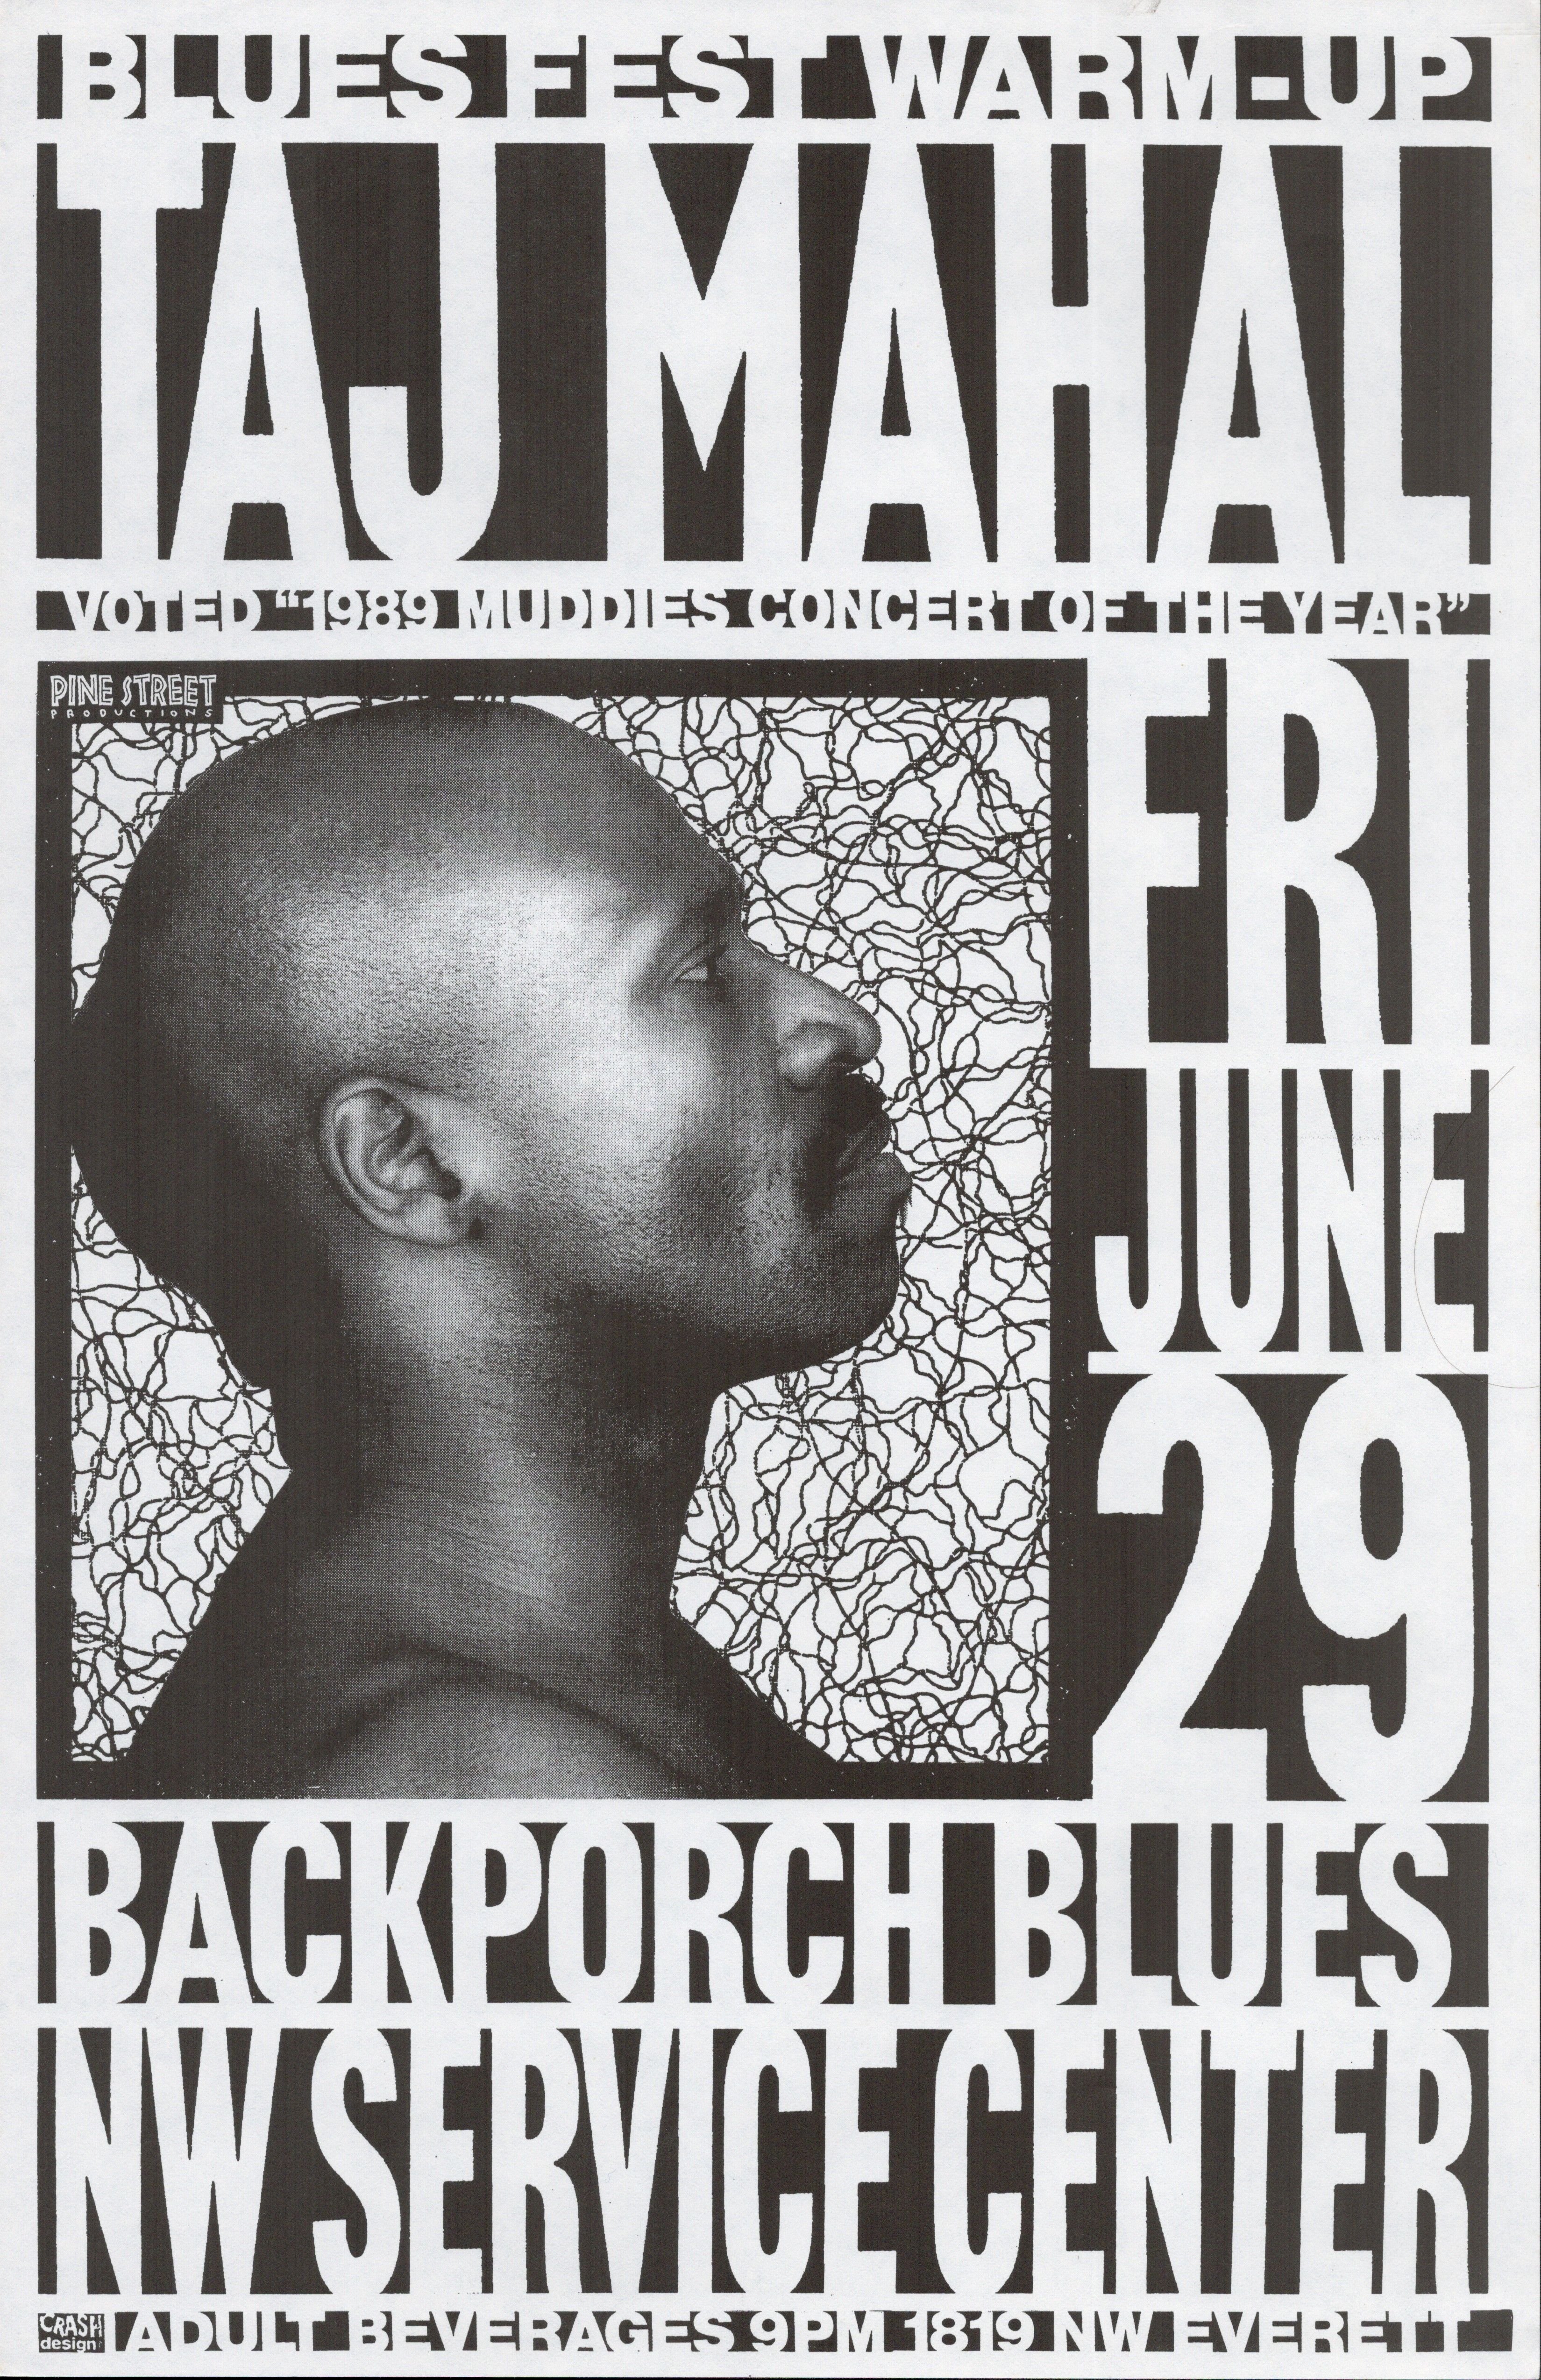 Taj Mahal & Backporch Blues 1000 NW Service Center Jun 29 Concert Poster